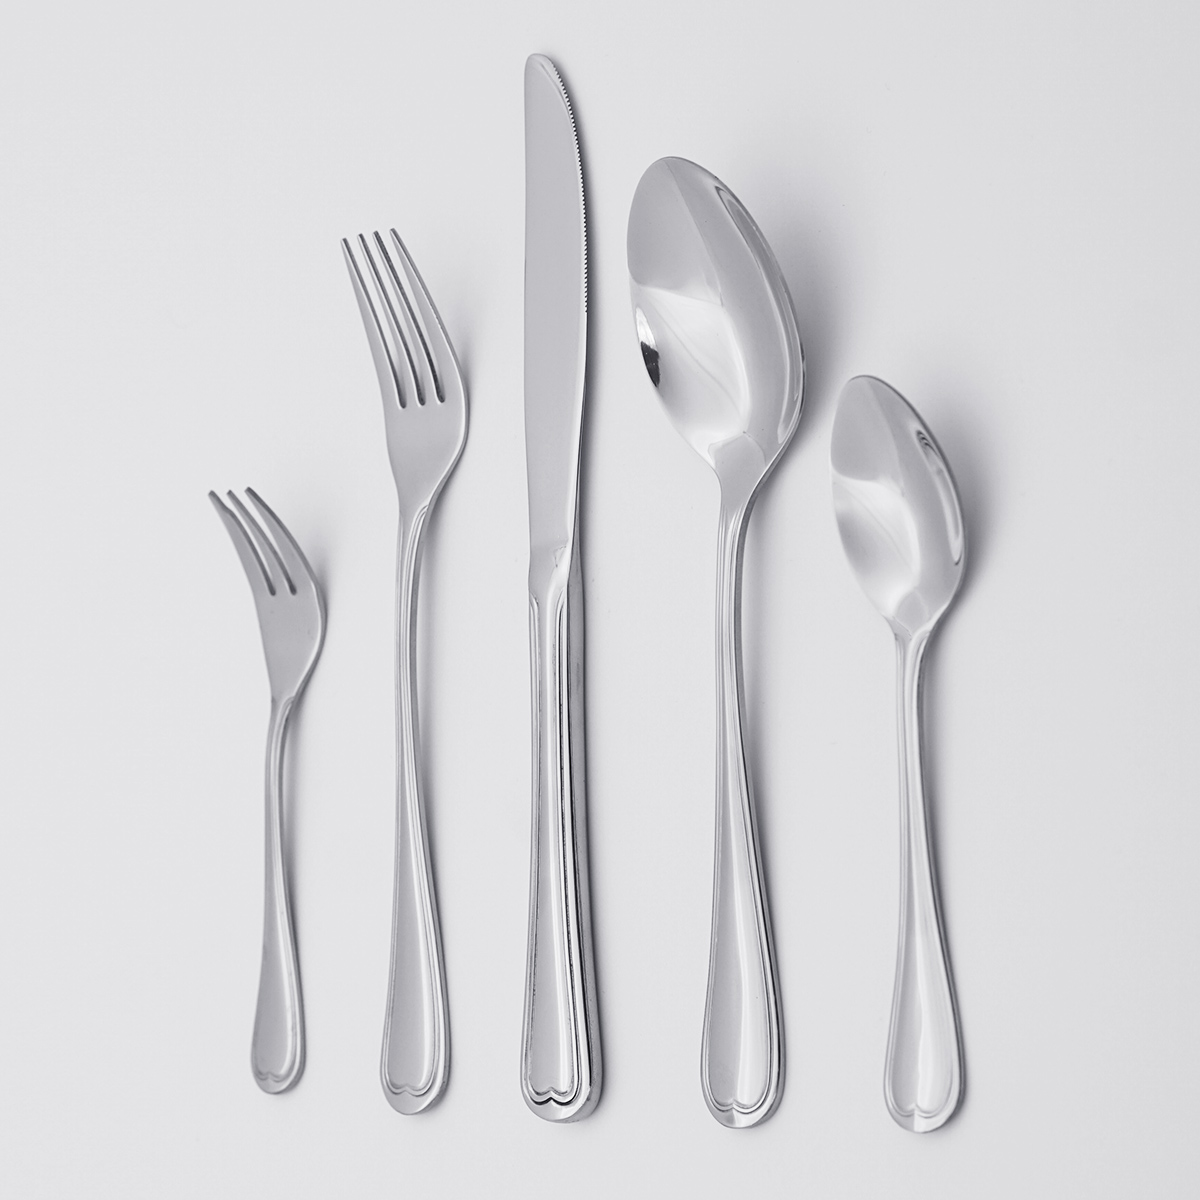 Wholesale Bulk Stainless Steel Knife Spoon Fork Serving Cutlery For Restaurant Hotel